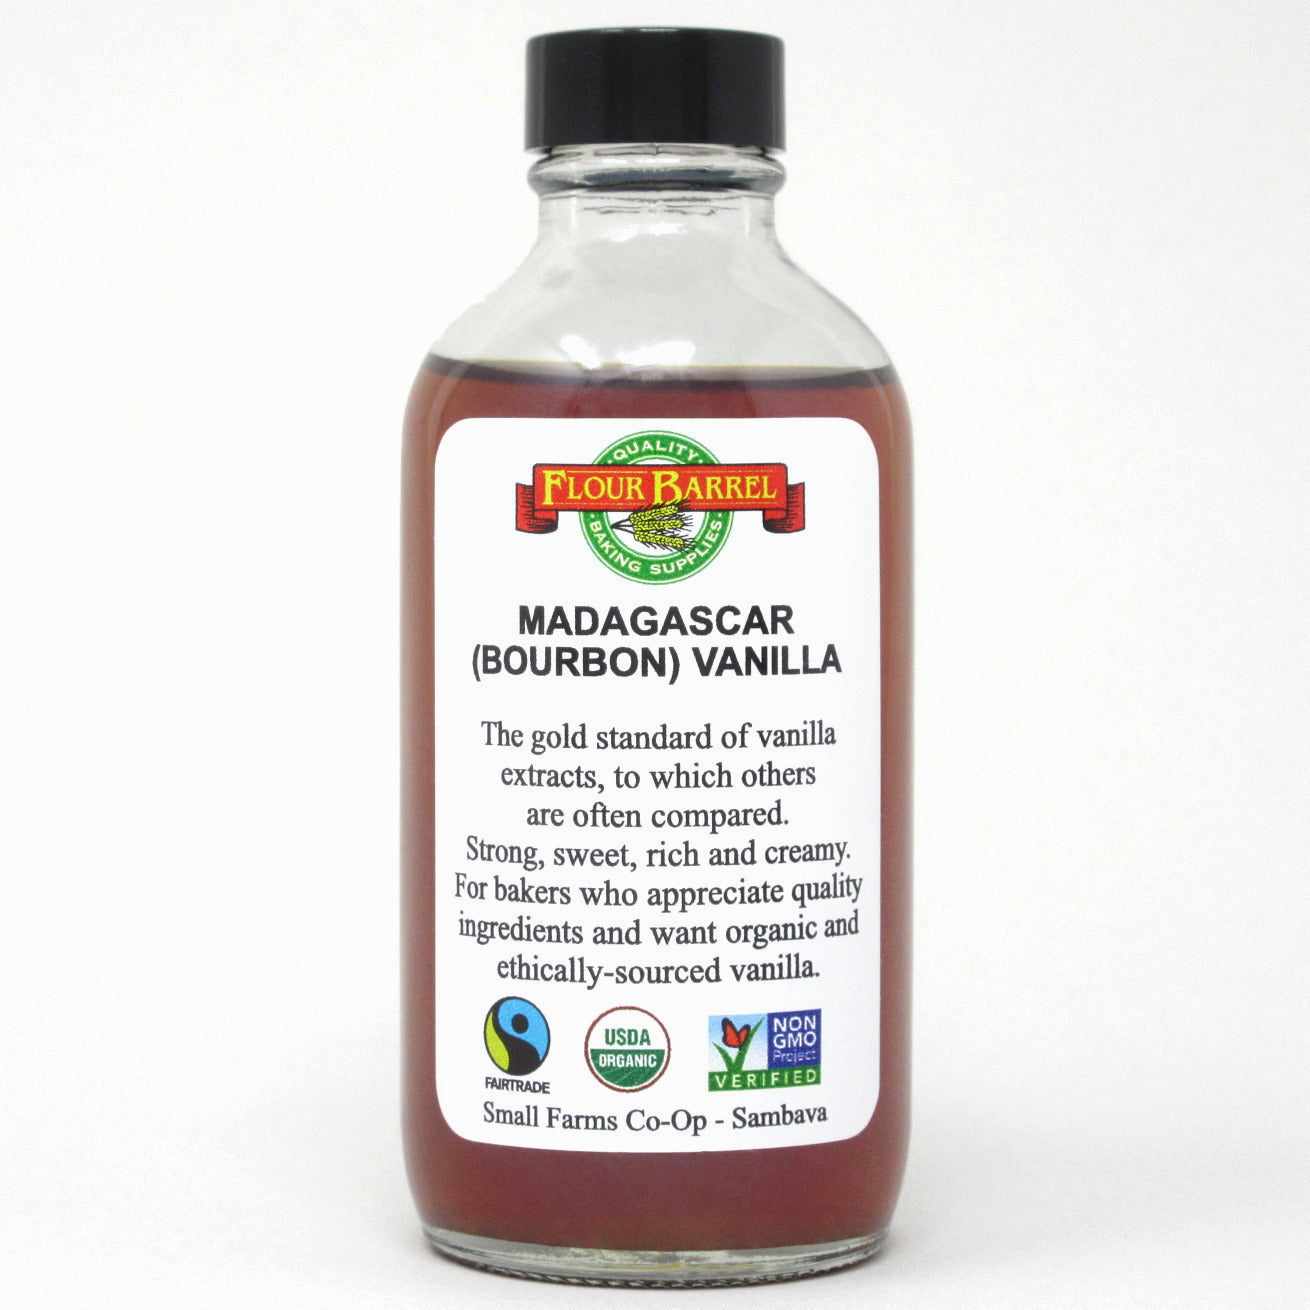 Flour Barrel product image - Madagascar (Burbon) Vanilla